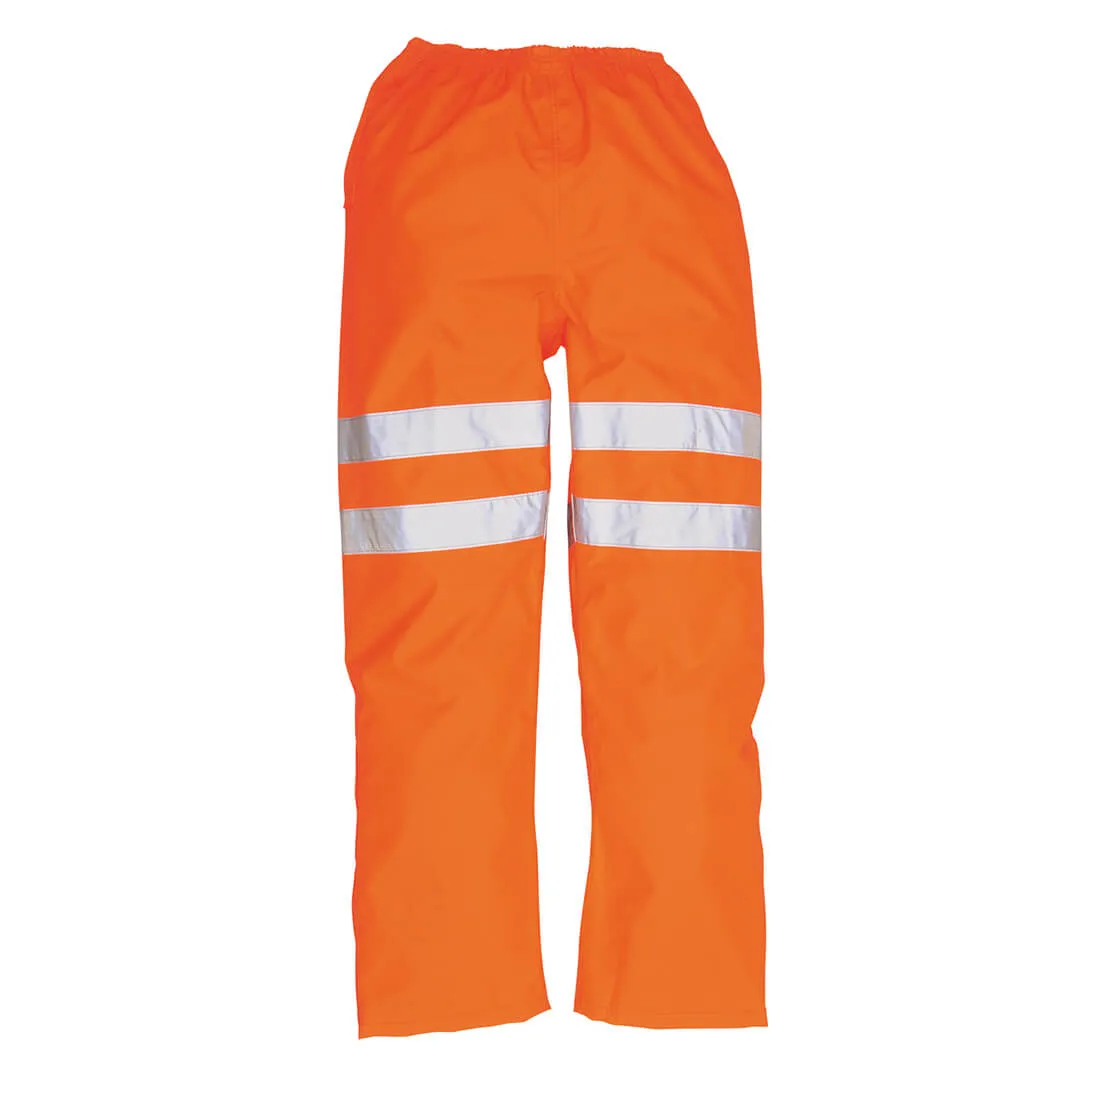 Oxford Weave 300D Class 2 GO/RT Hi Vis Traffic Trousers - Orange, S